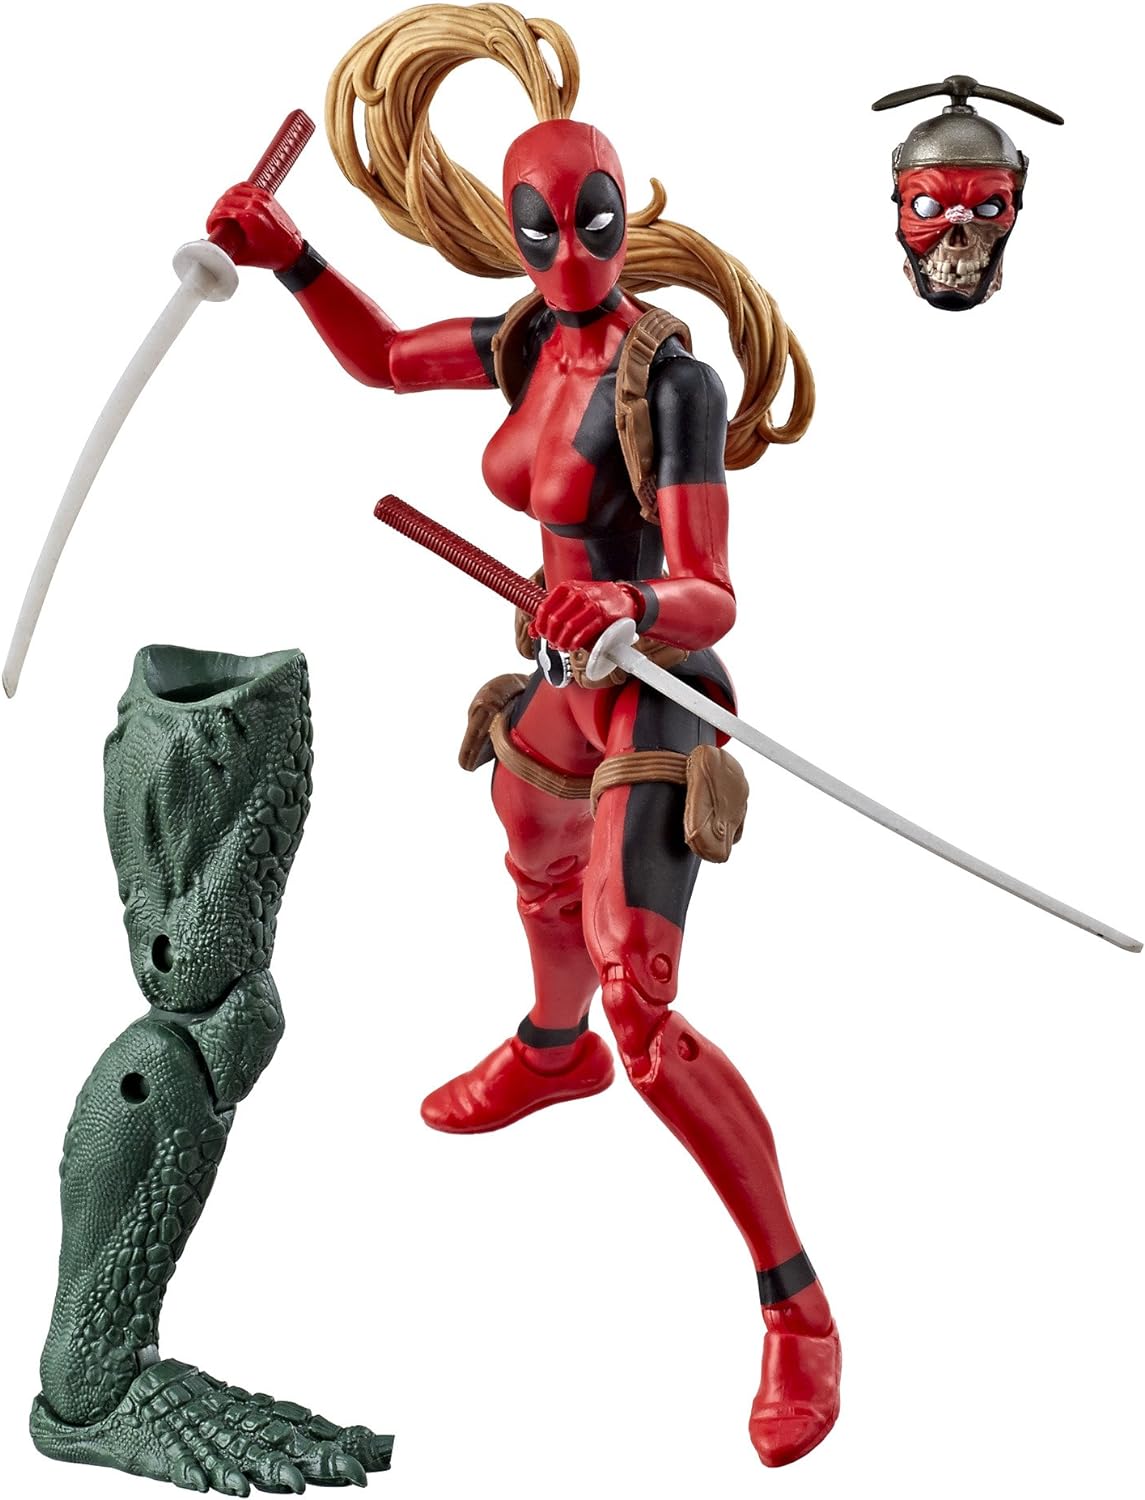 Lady Deadpool Action Figure - Lady Deadpool Marvel Legends Series - 6 Inch Action Figure